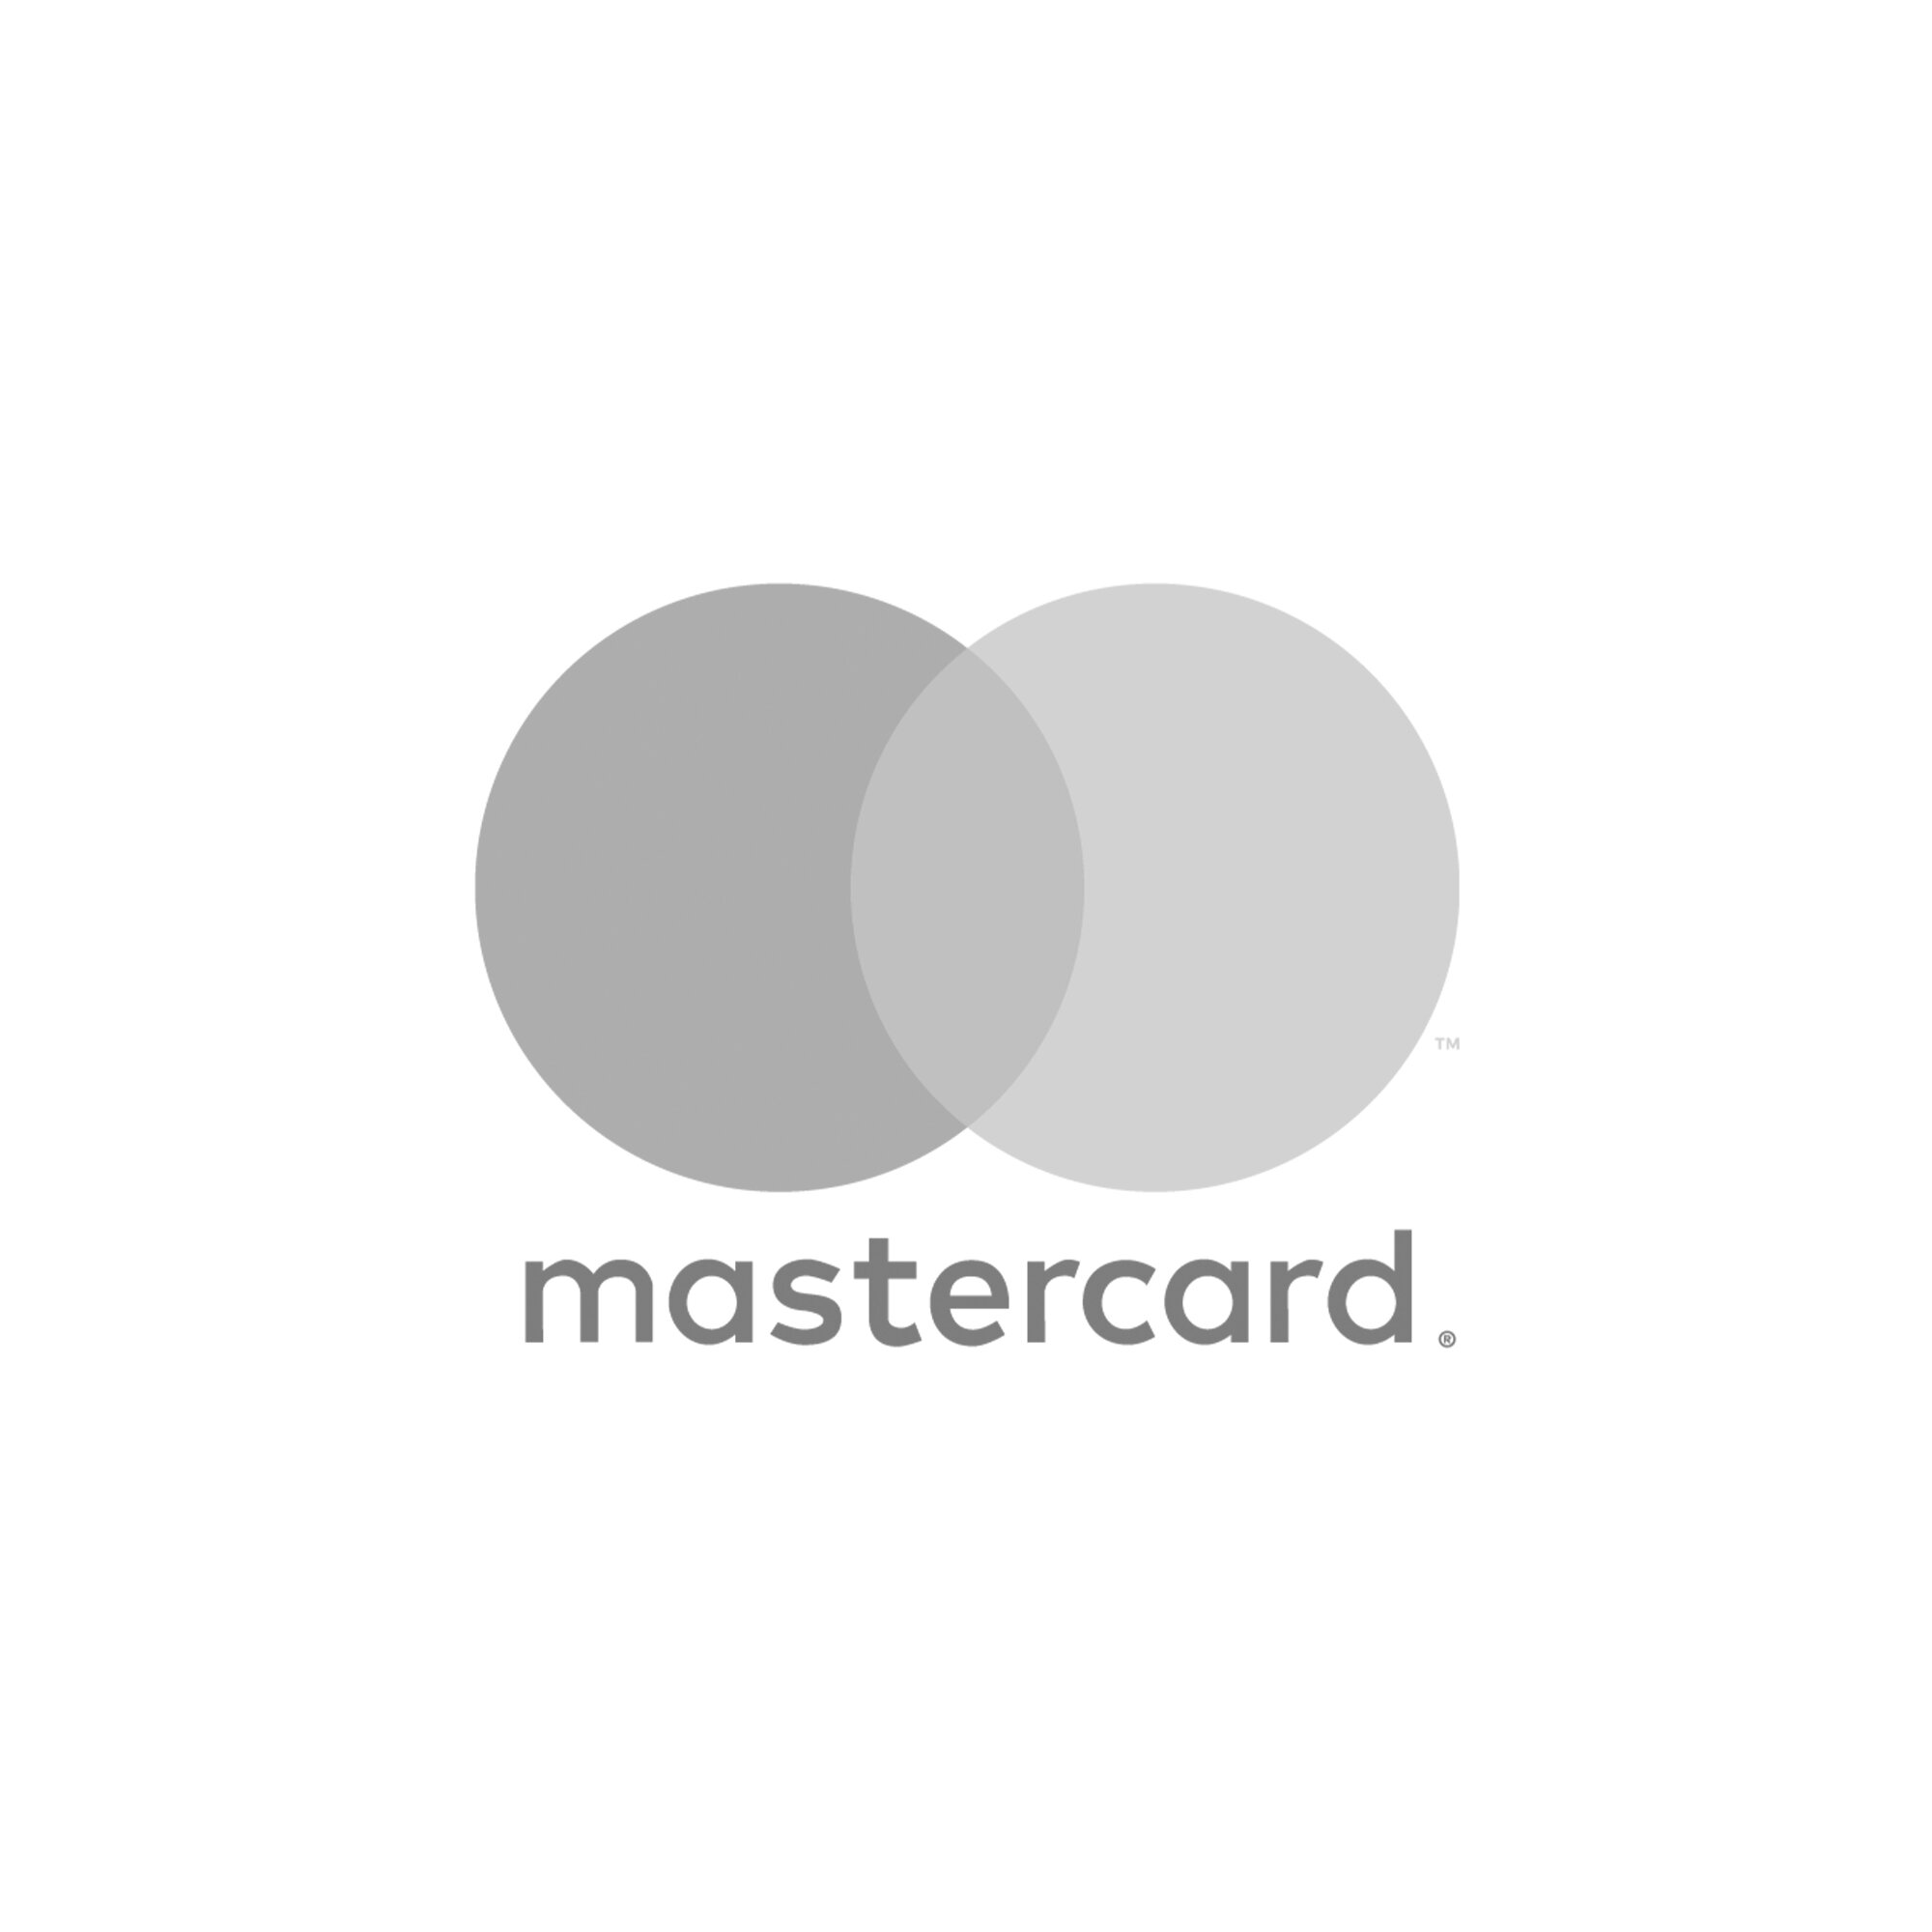 Mastercard 02.jpg